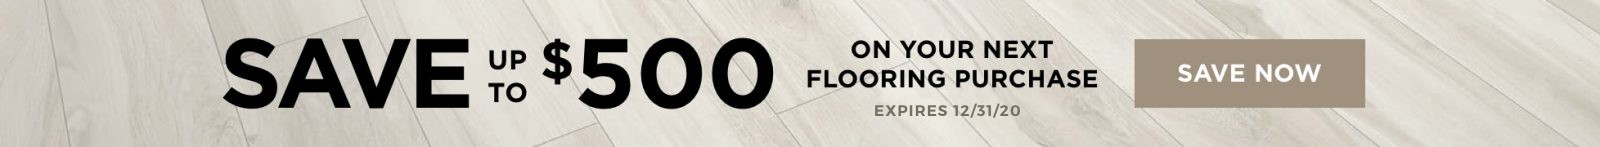 Macco's Floor Covering Savings Coupon | Hadinger Flooring